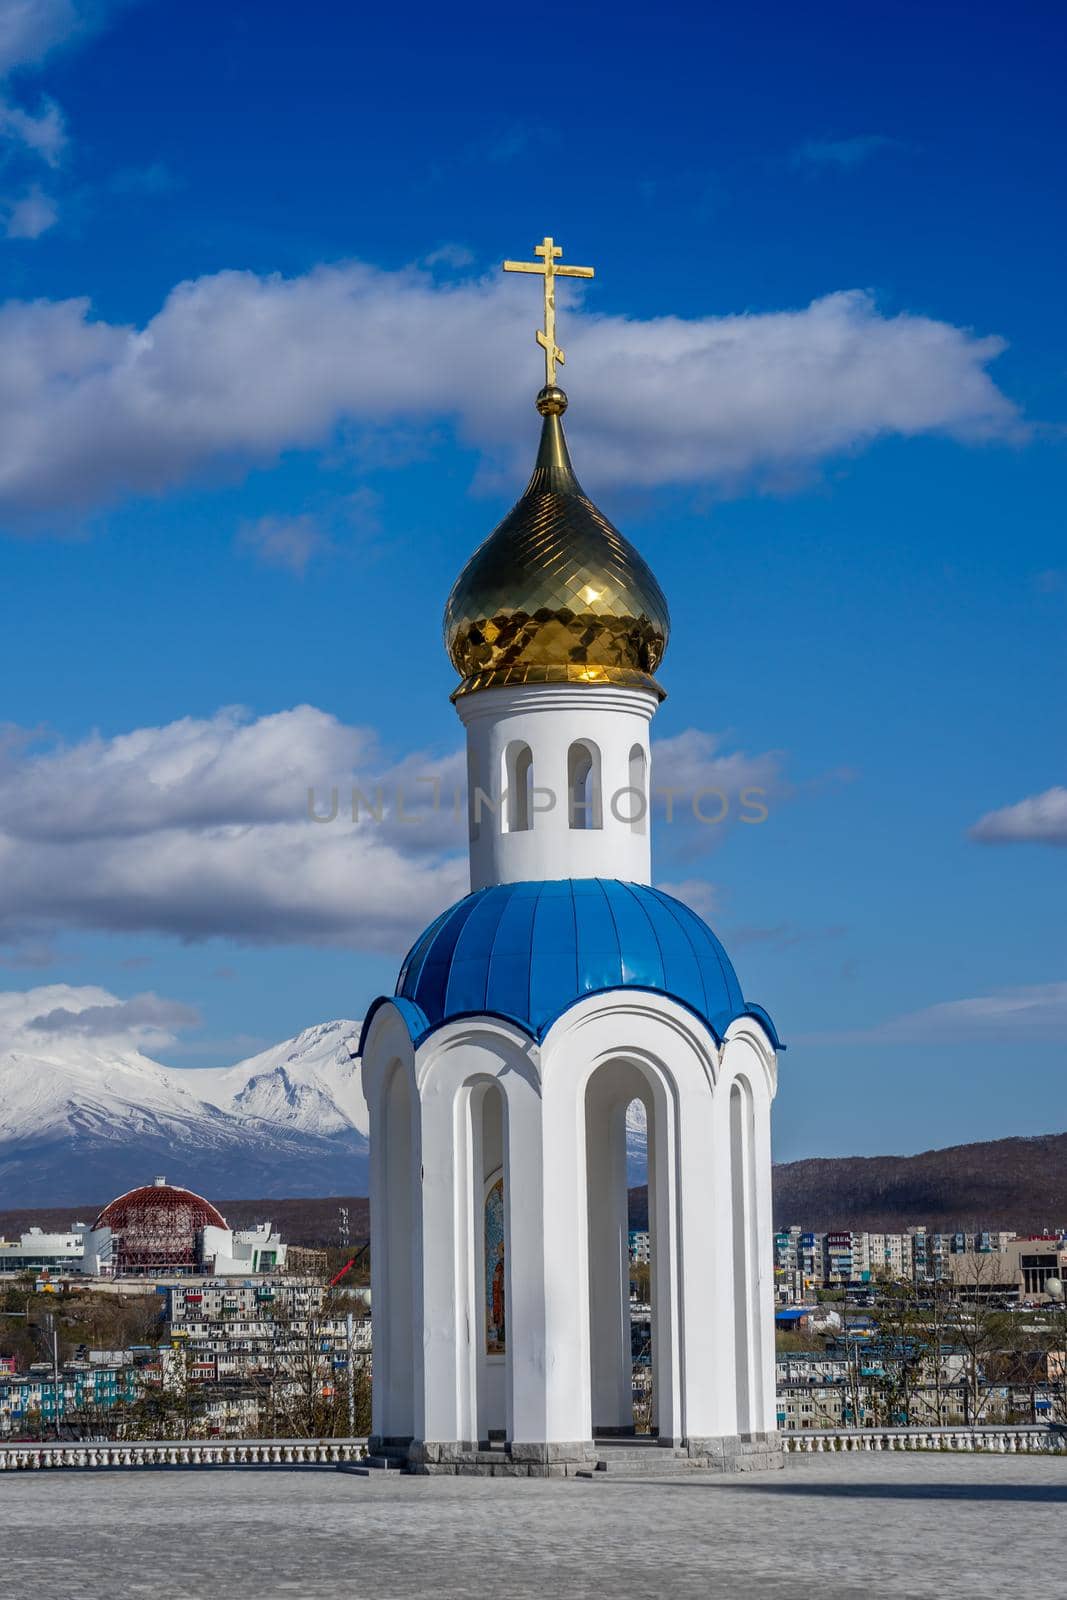 The chapel building against the blue sky. Petropavlovsk-Kamchatsky, Russia